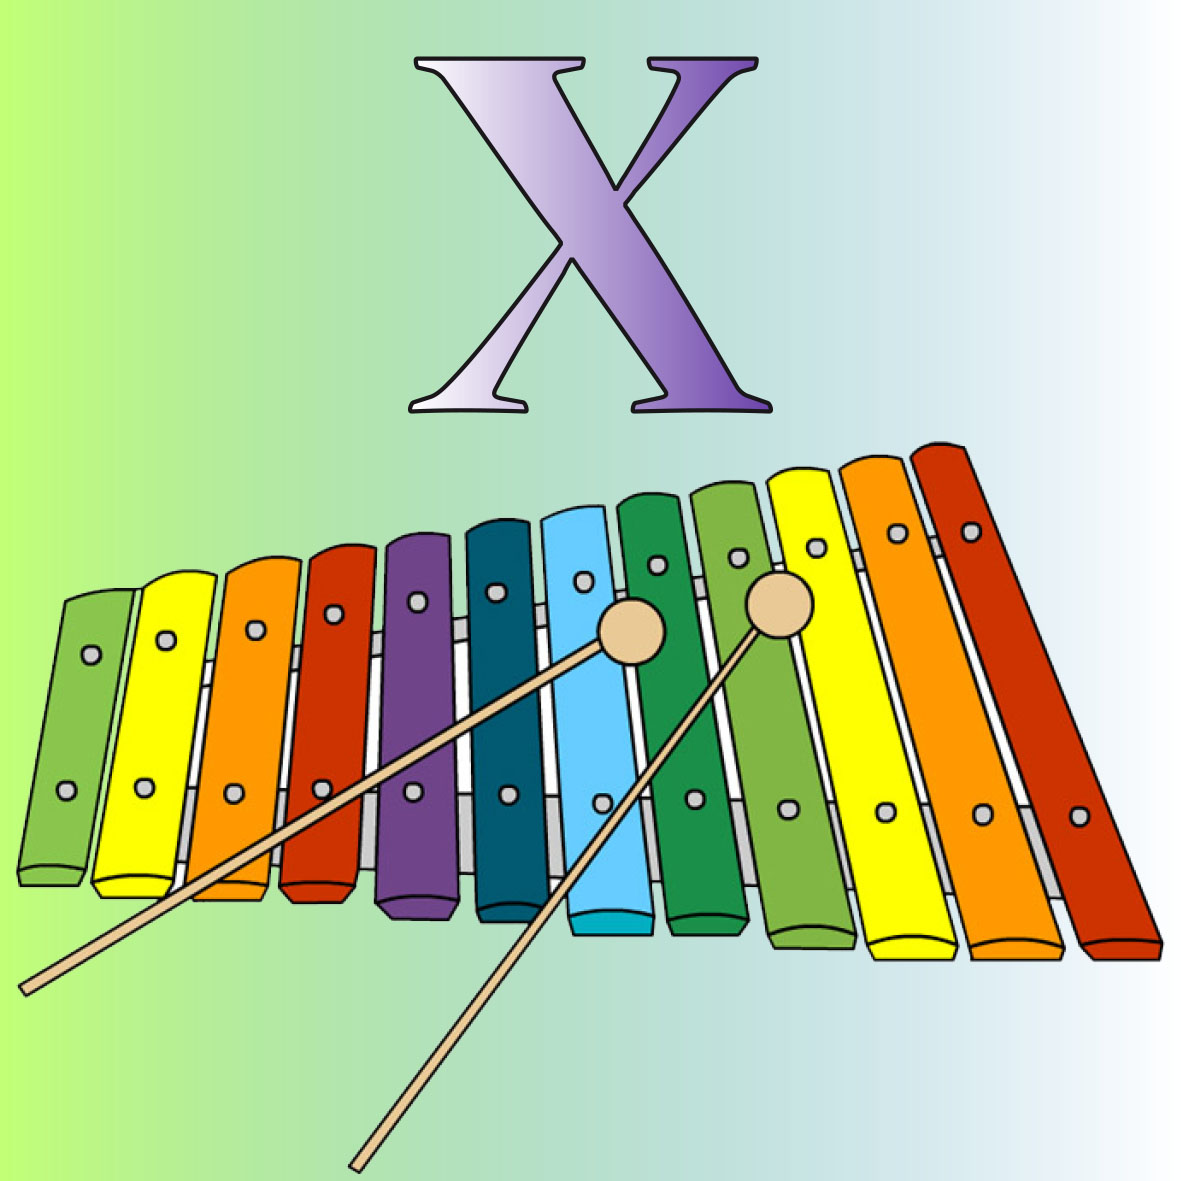 imagen de un instrumento musical llamado  Xilofono